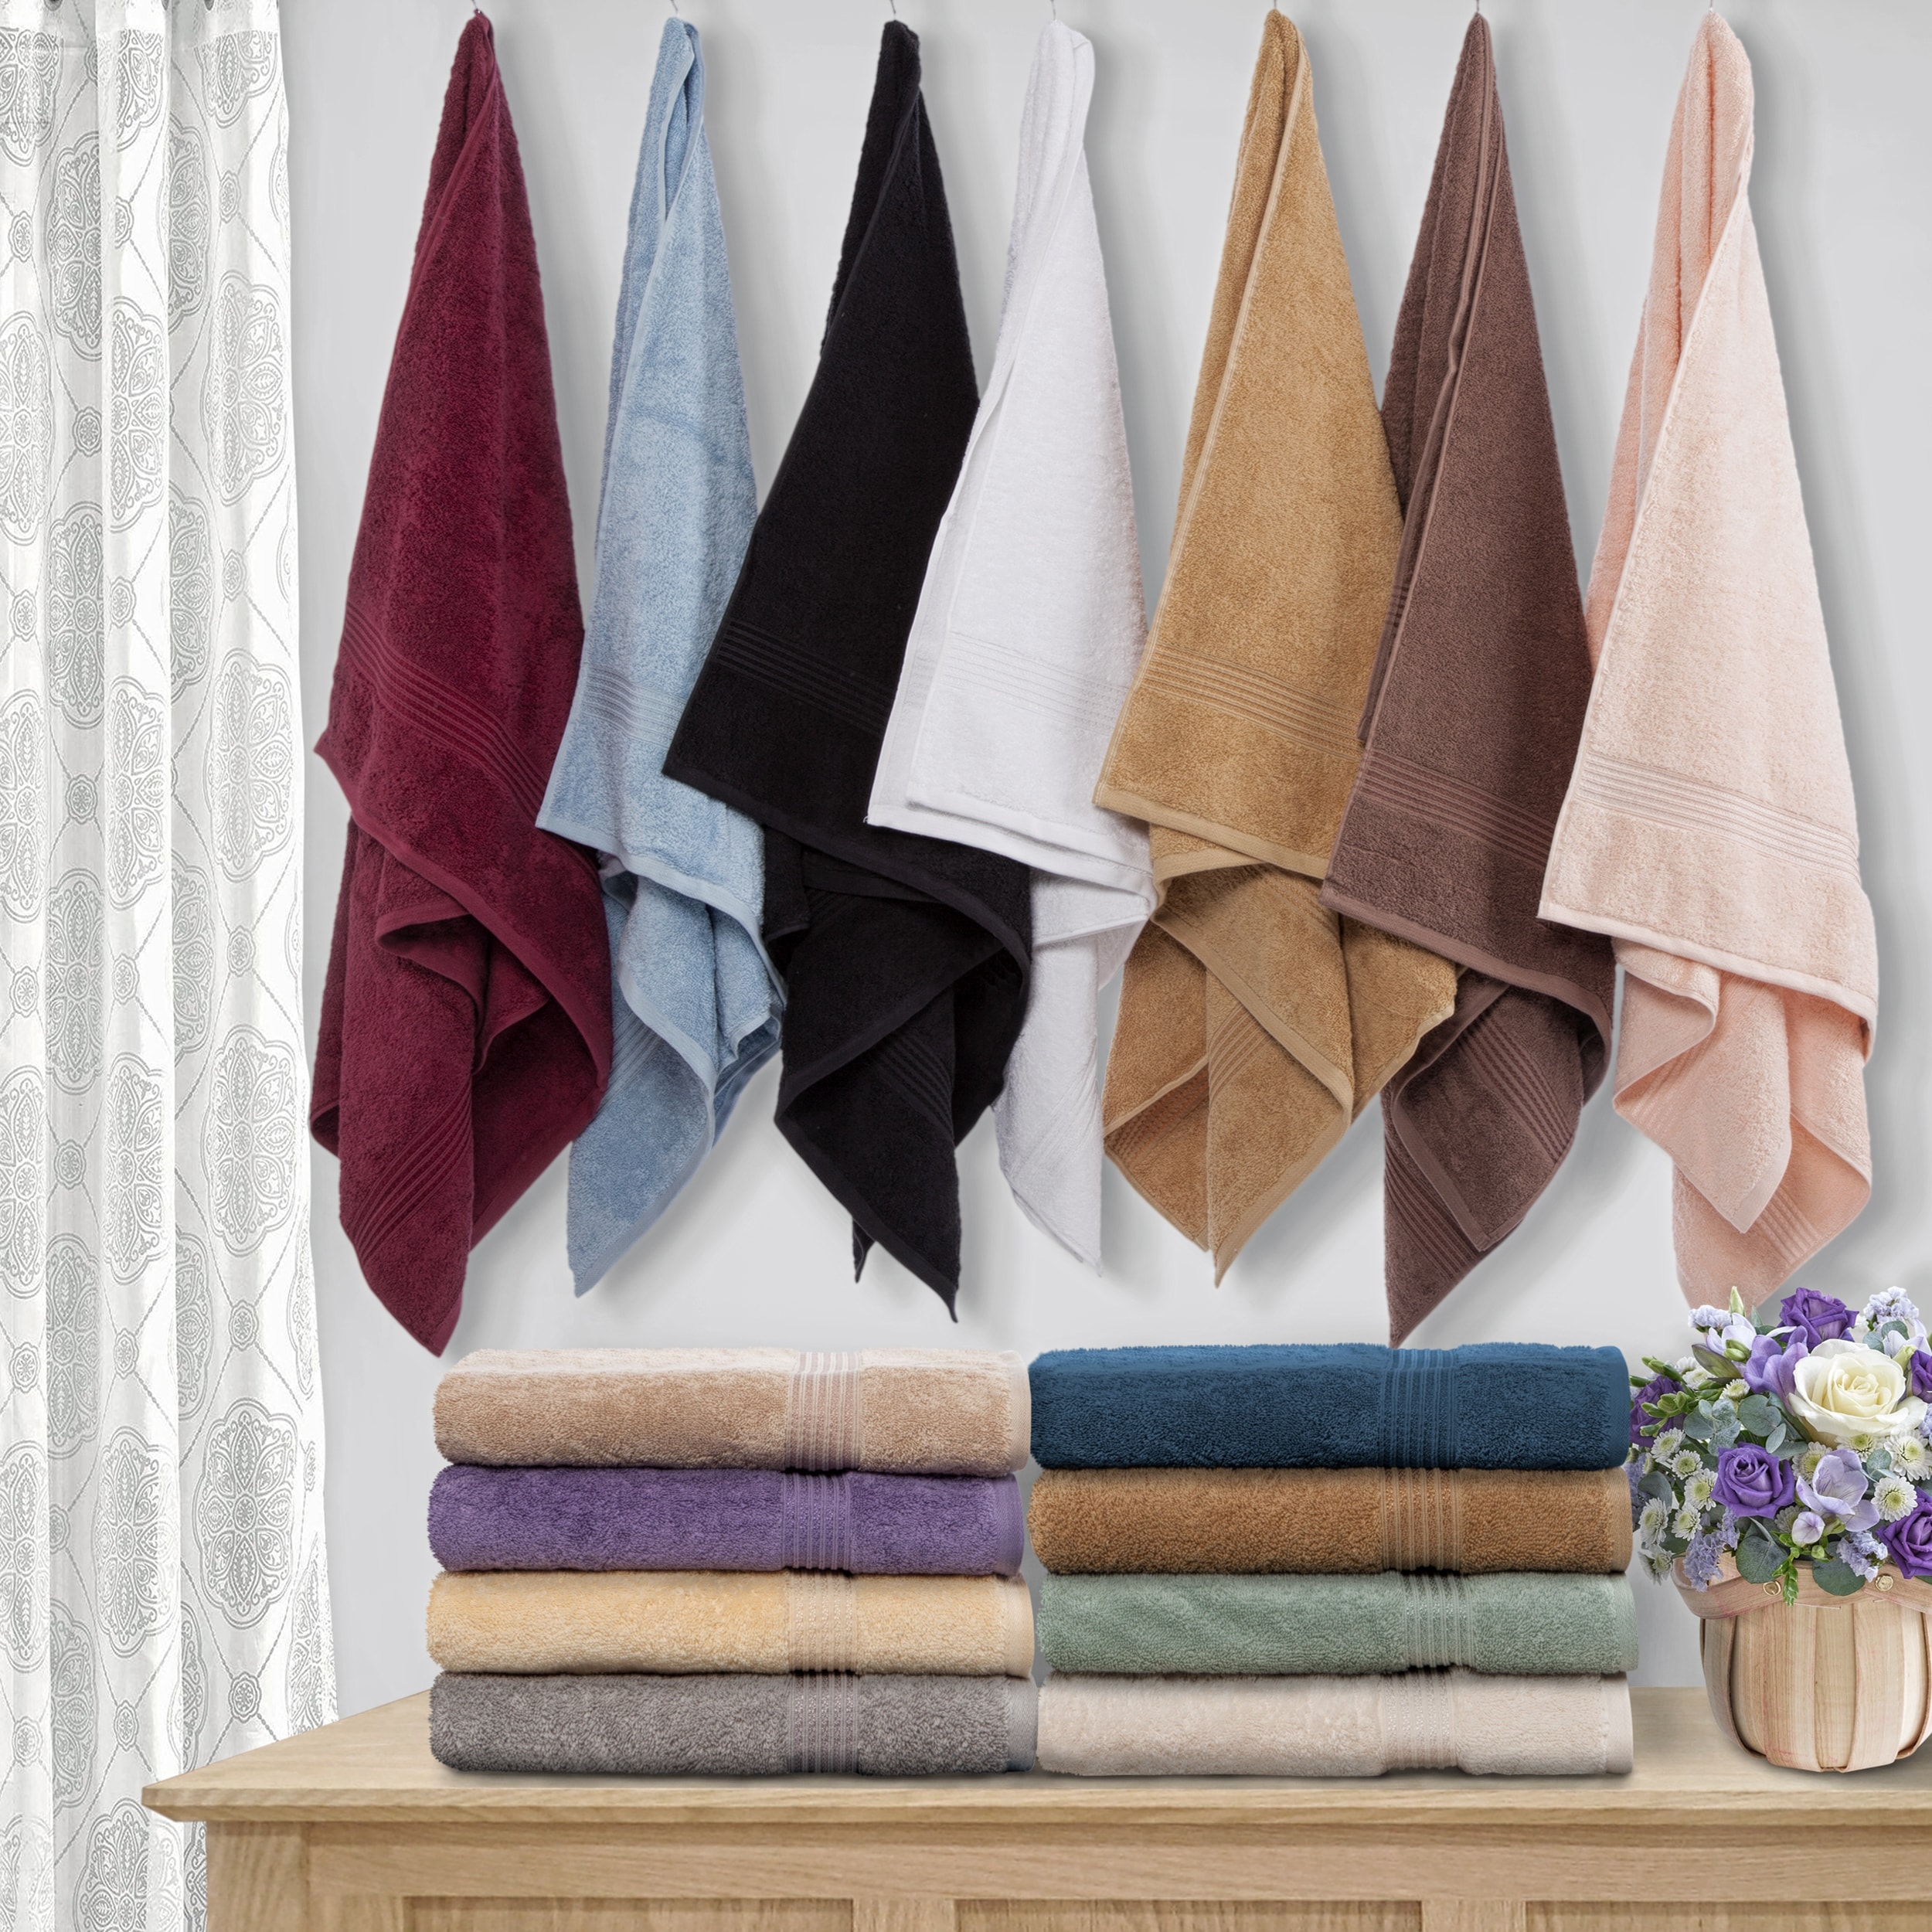 Charisma Soft 100% Hygro Cotton 2-piece Bath Towel Set spa Machine